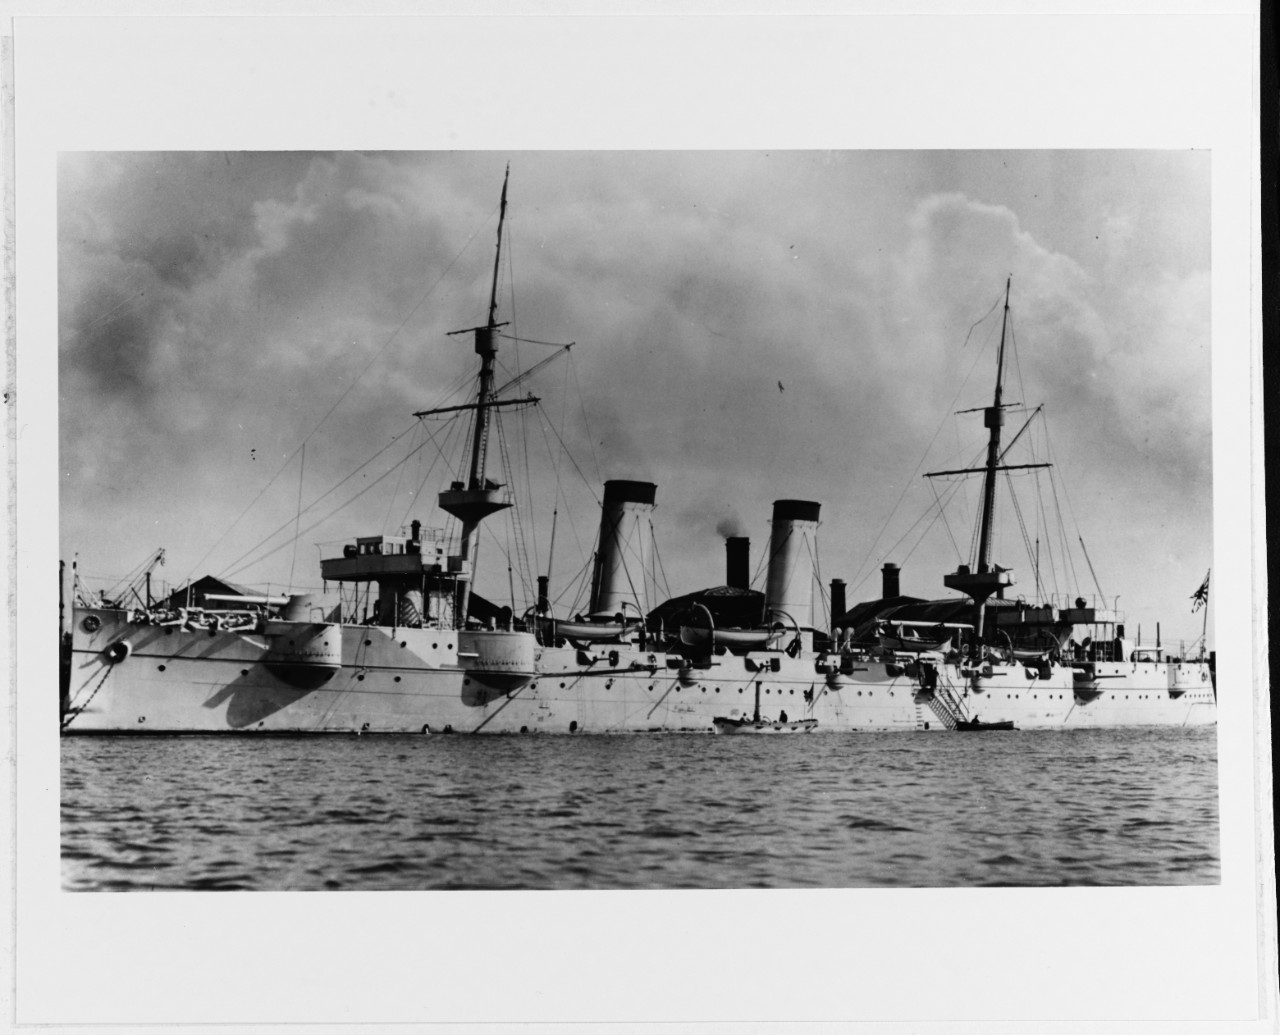 KASAGI (Japanese protected cruiser, 1898-1916)